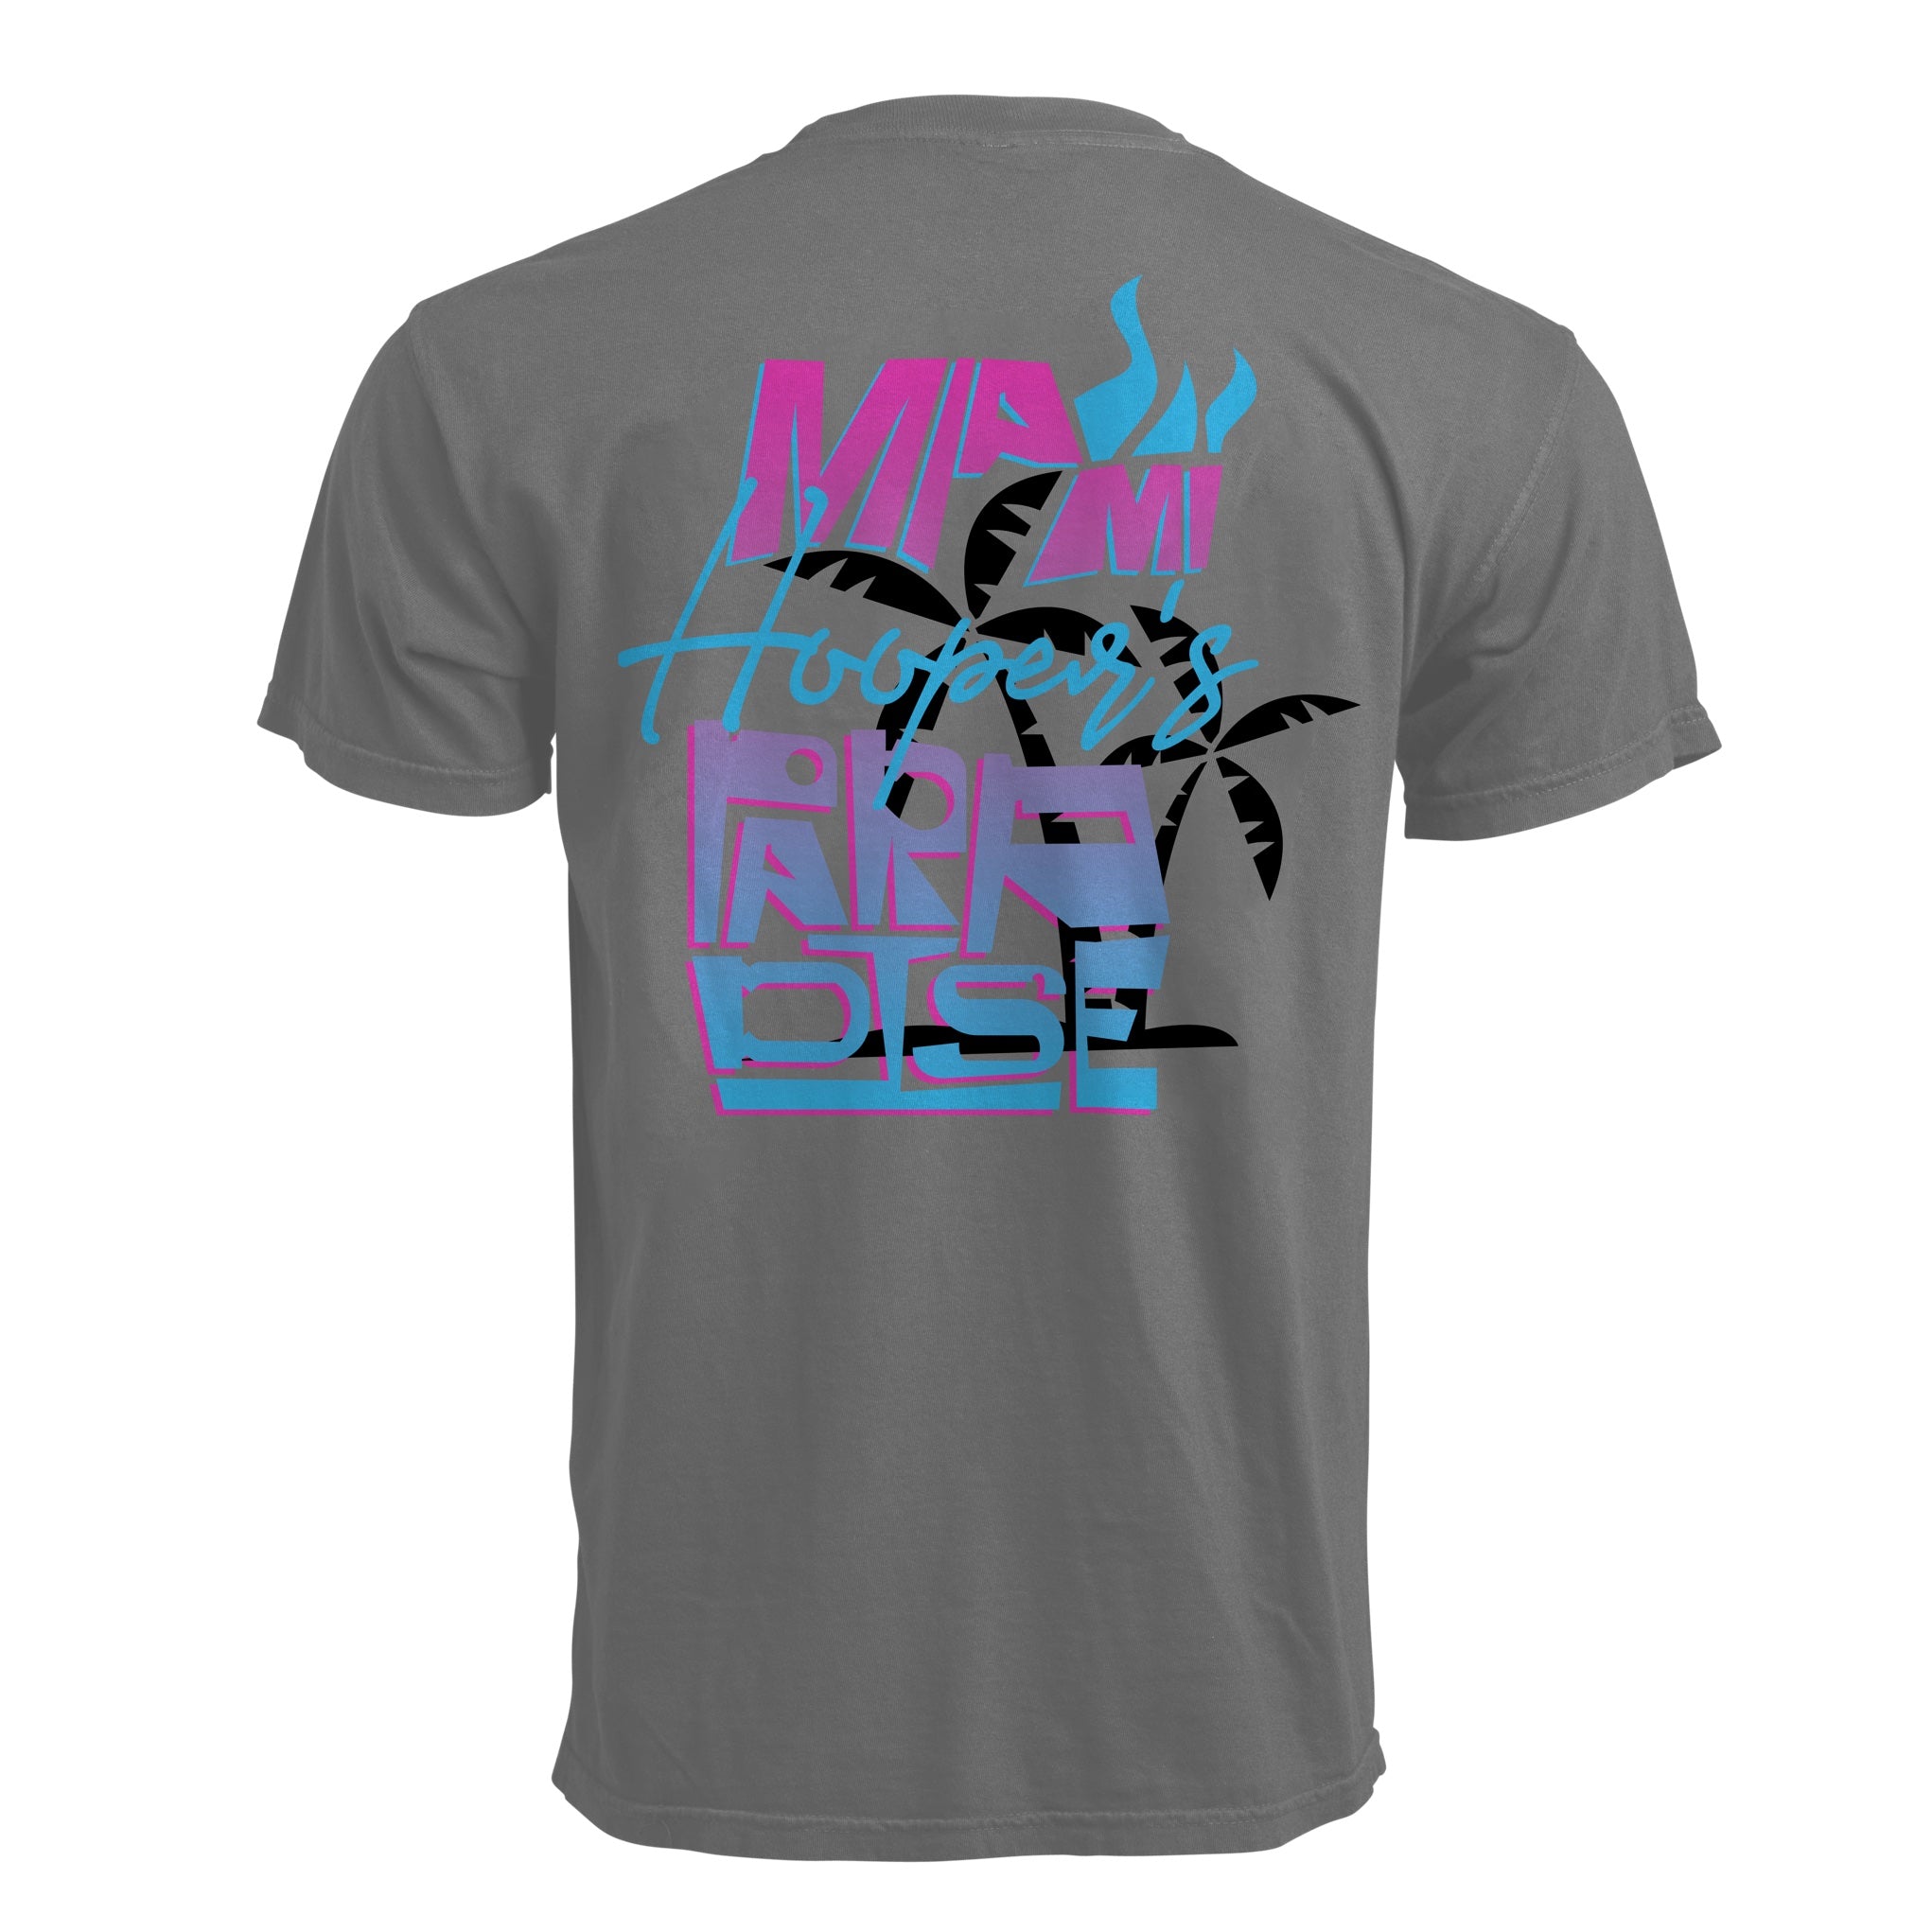 Hoopers Heaven T-Shirt